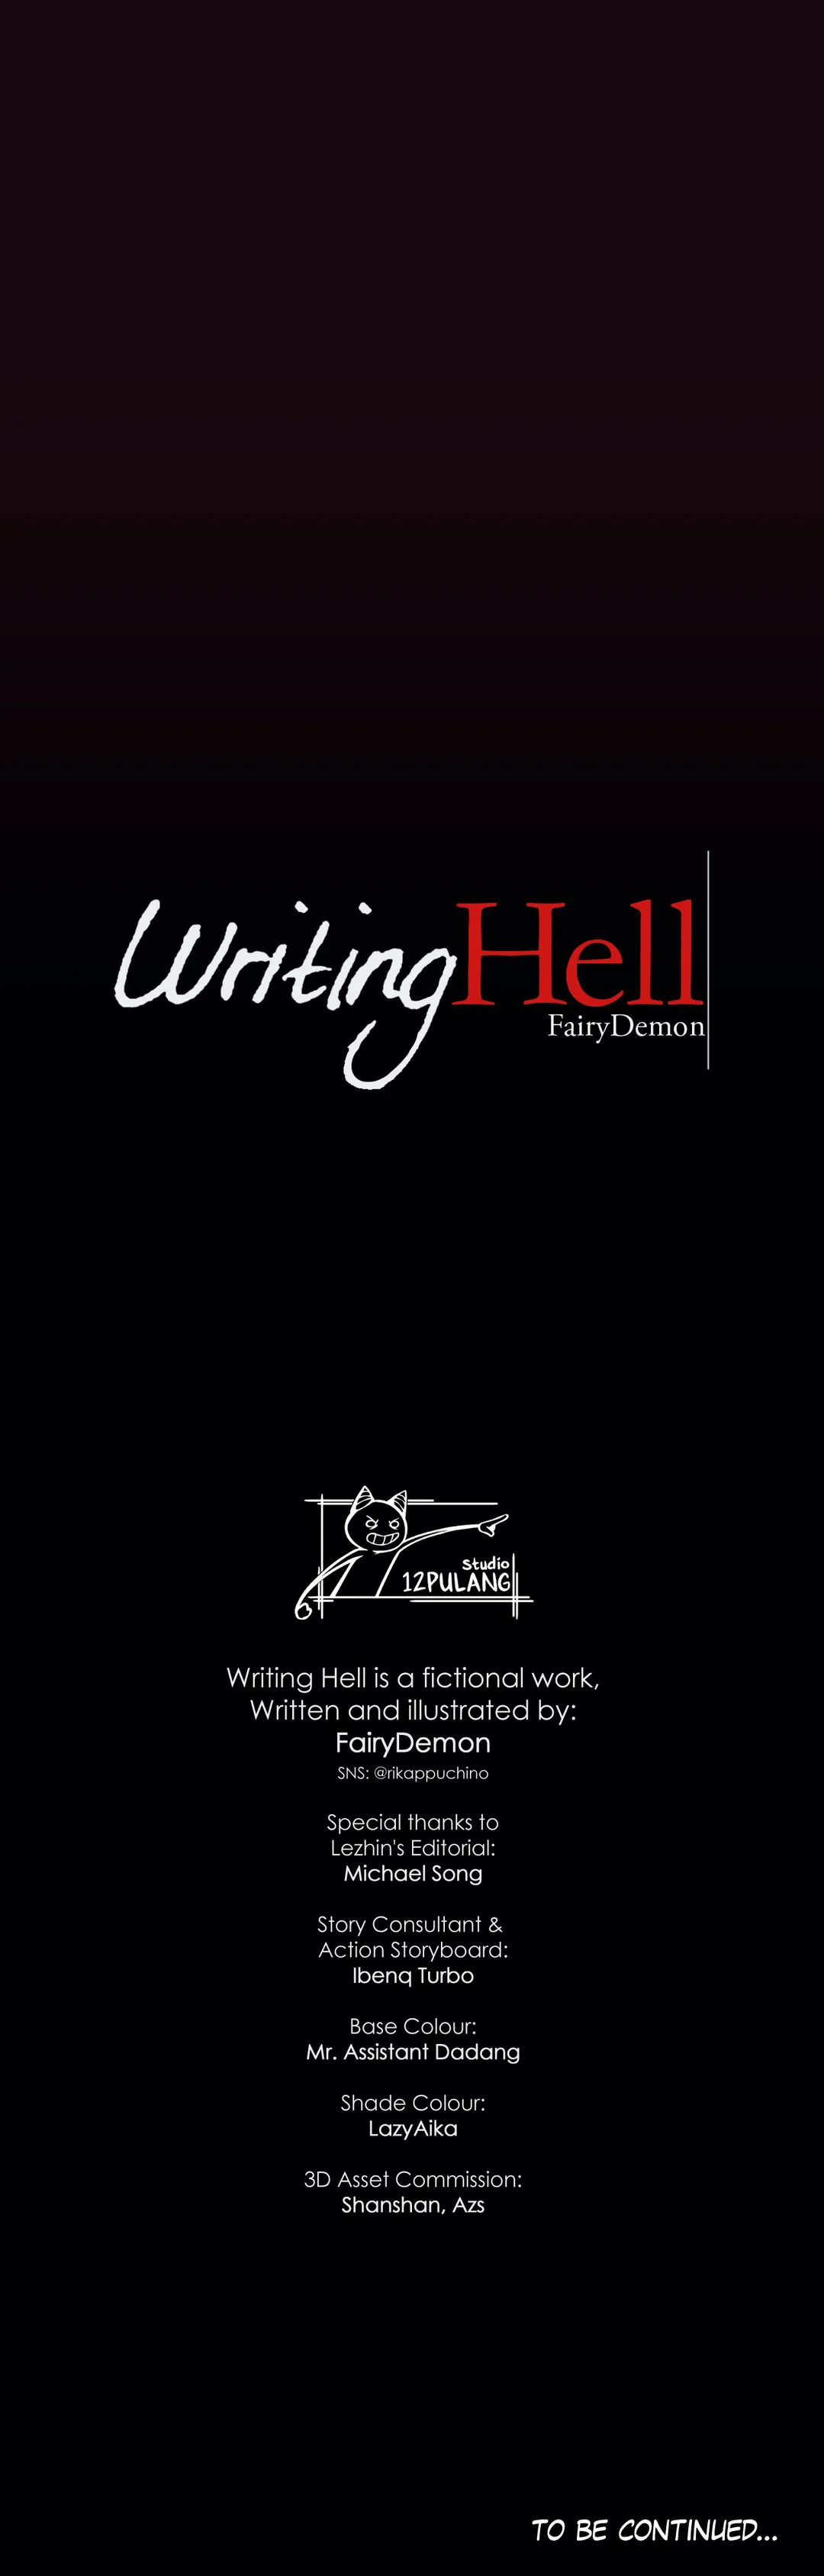 Writing Hell image